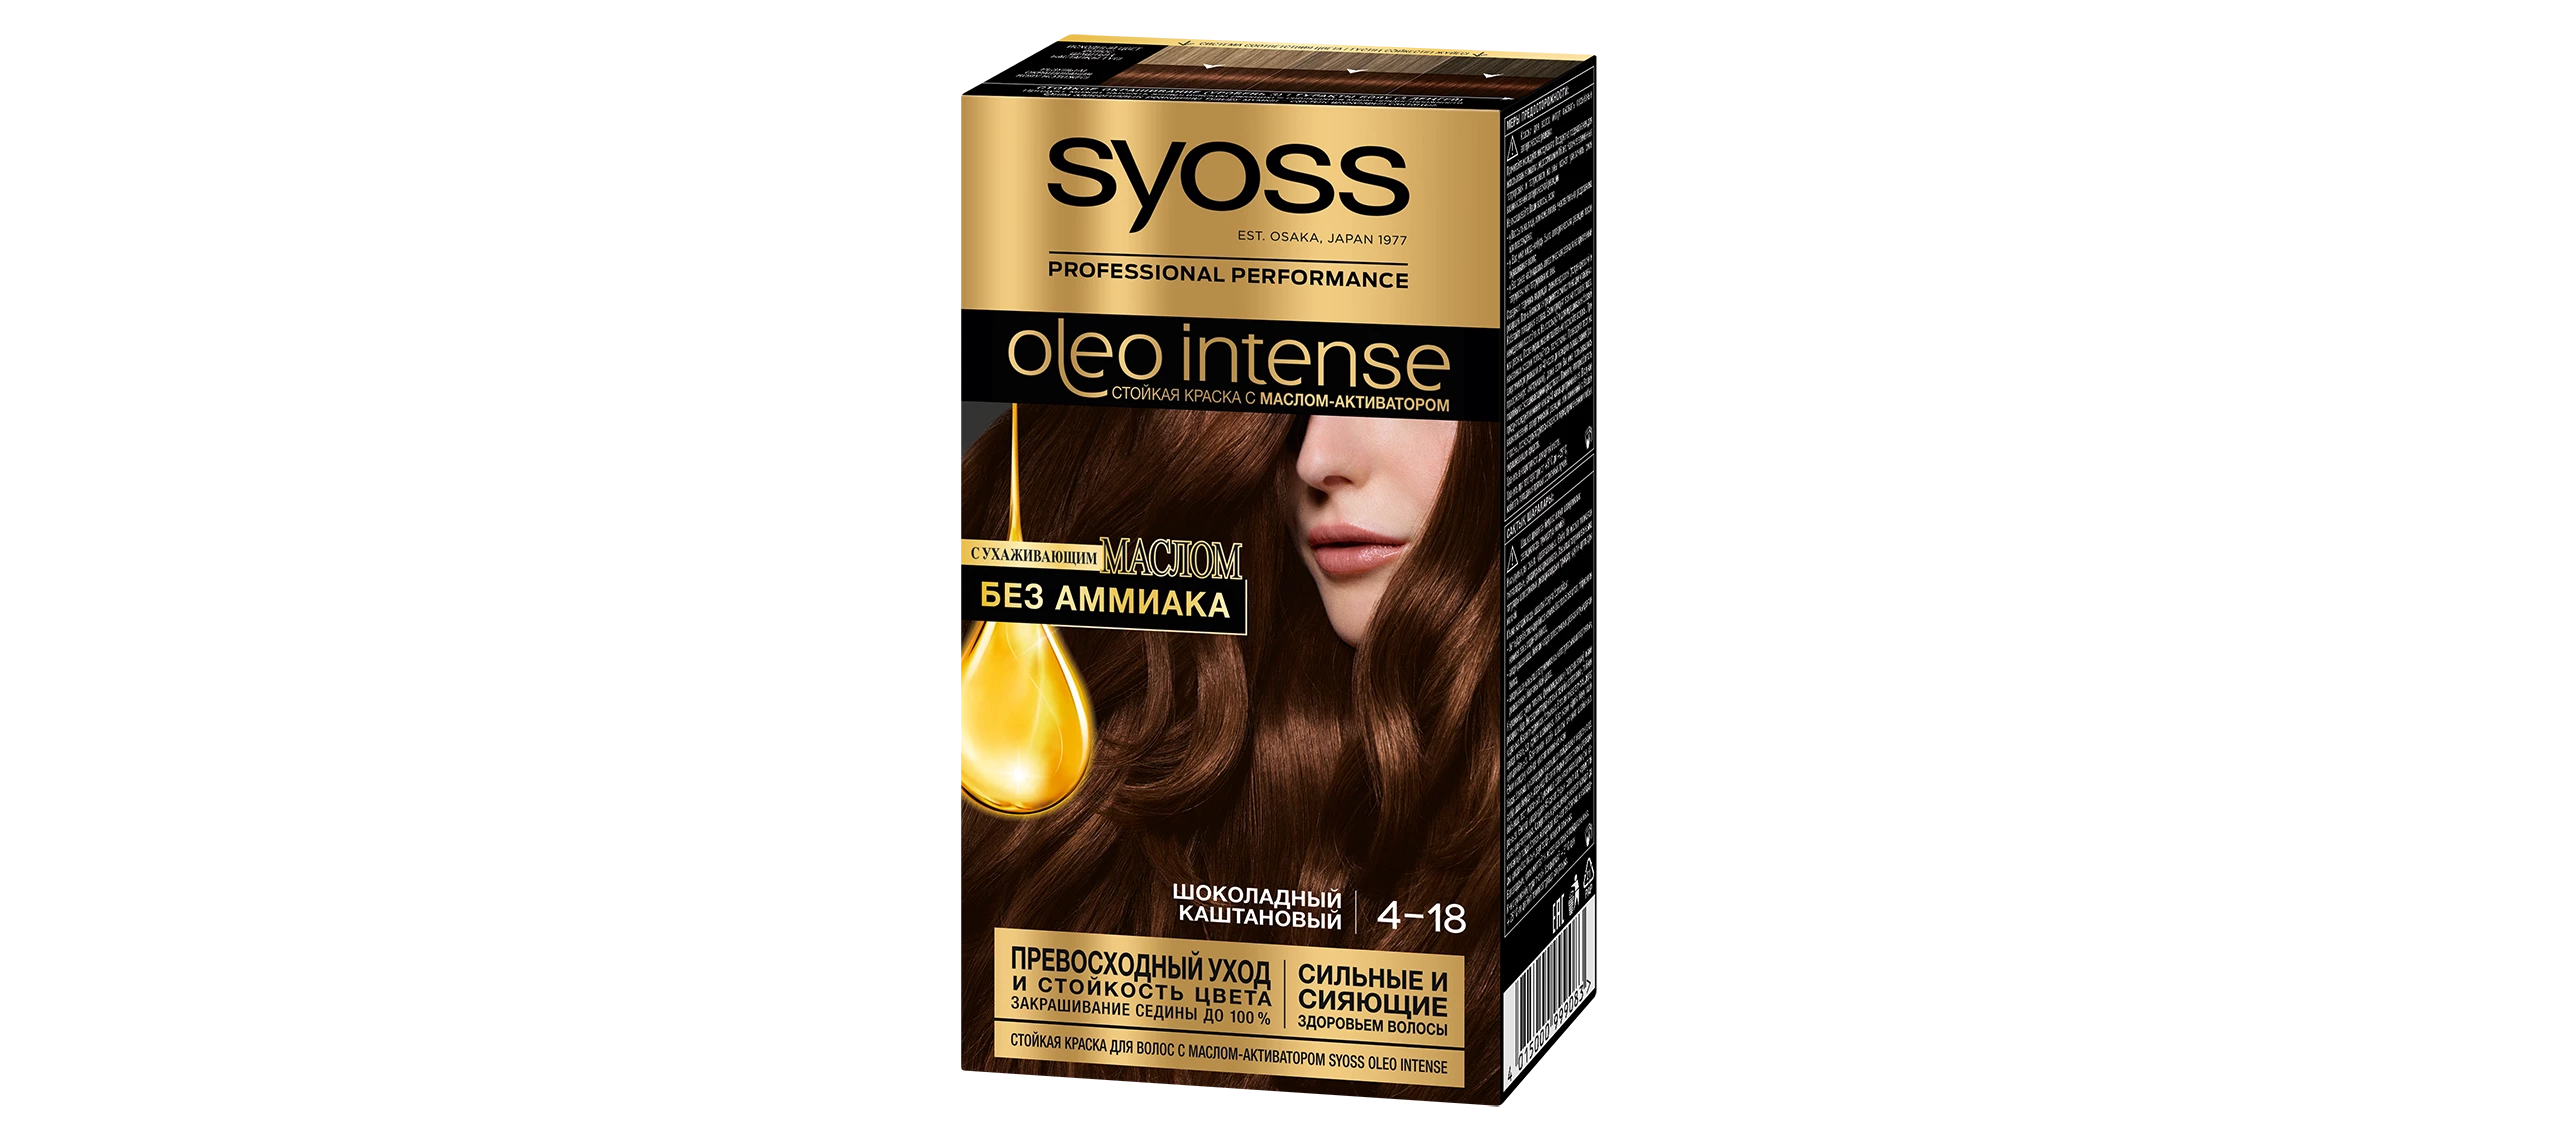 Syoss краска для волос oleo intense 1-10 глубокий черный